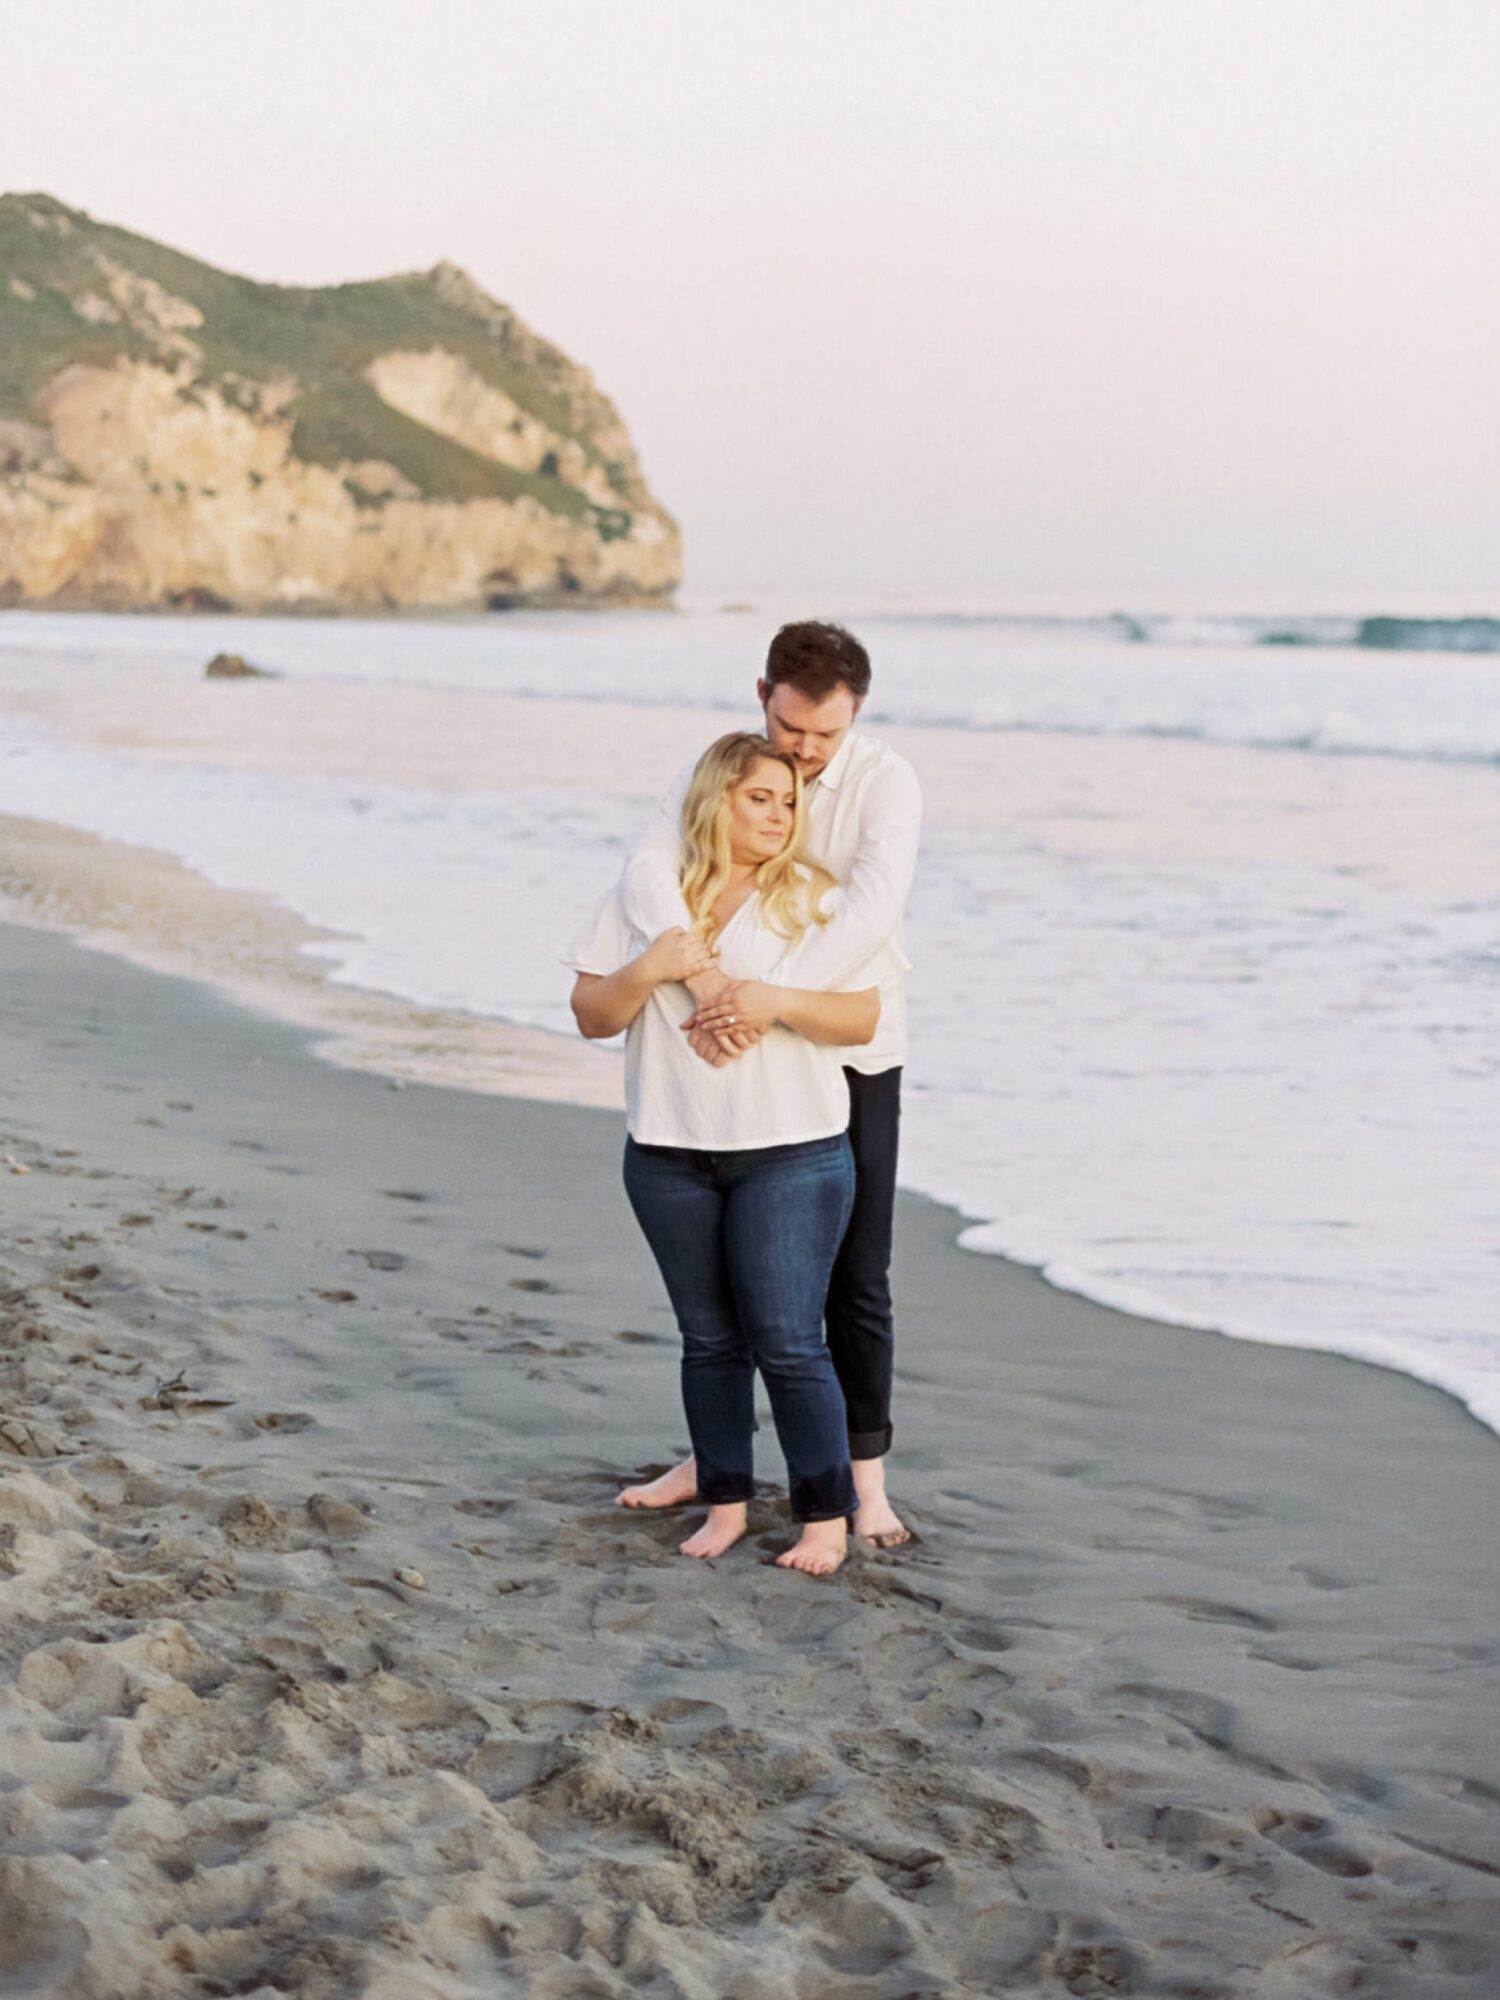 Engagement photos on Film at scenic Avila Beach by destination wedding photographer Jessica Sofranko